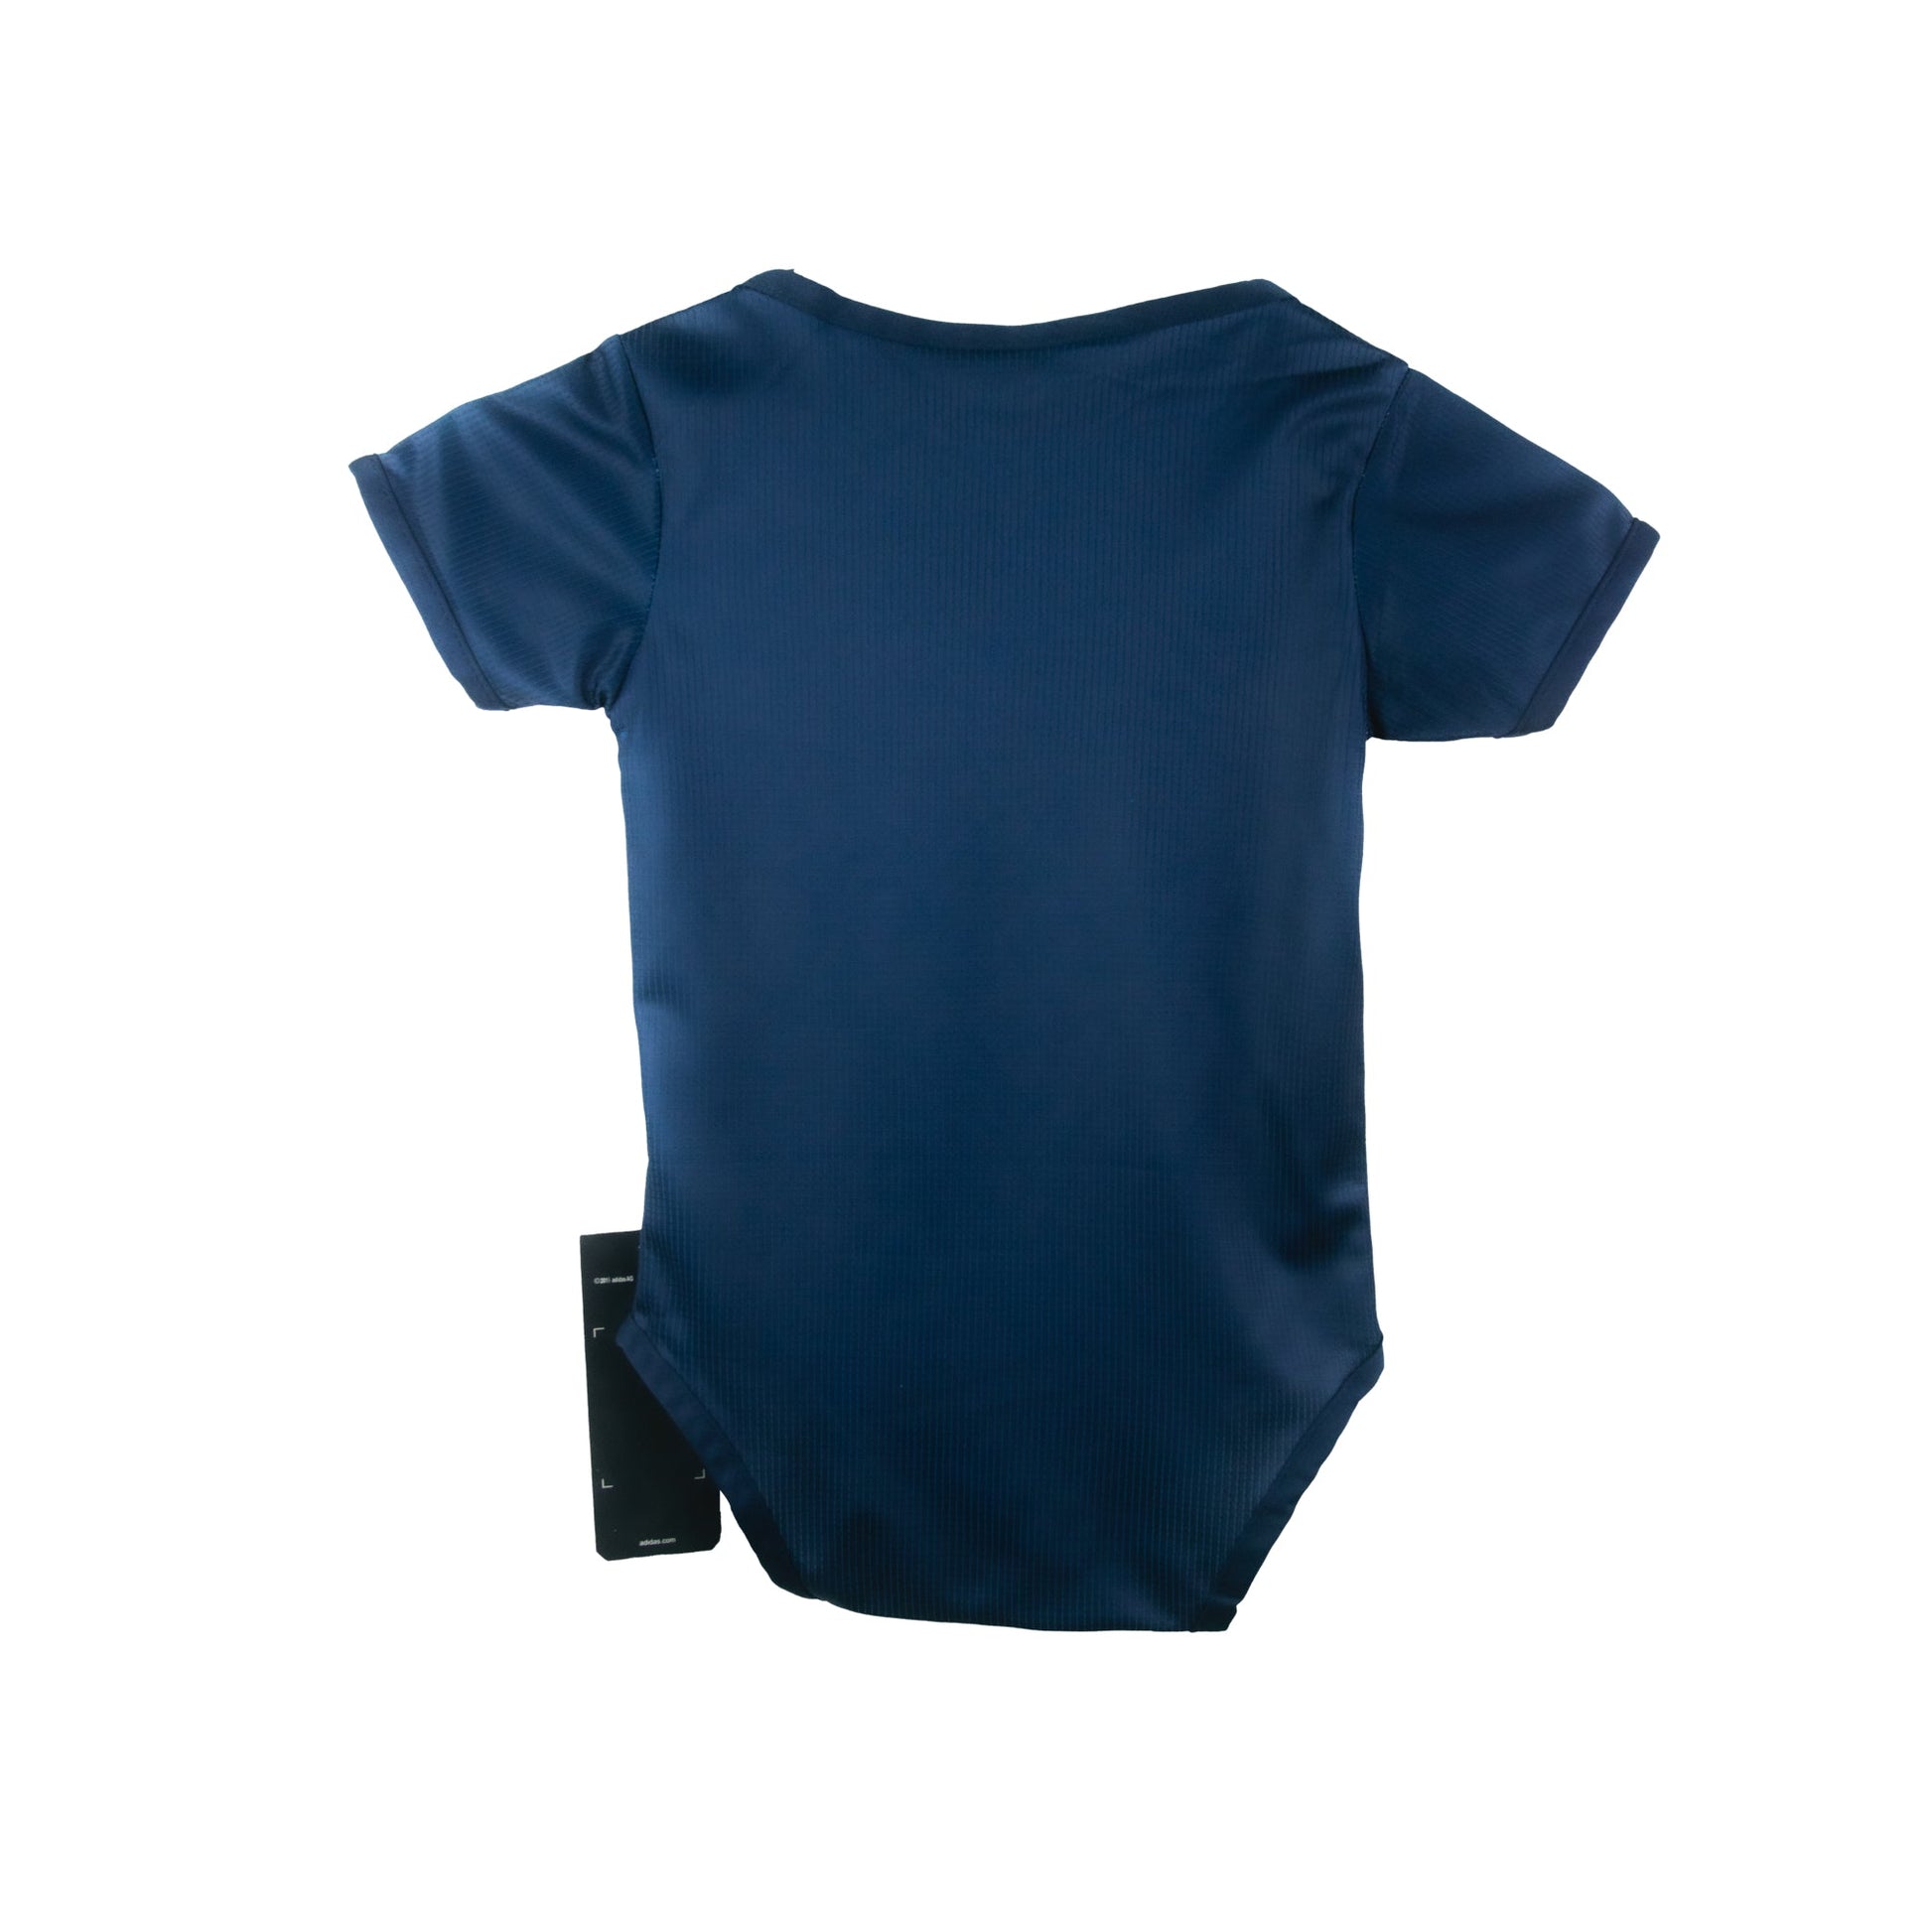 Real Madrid limited design infant bodysuit - Mitani Store